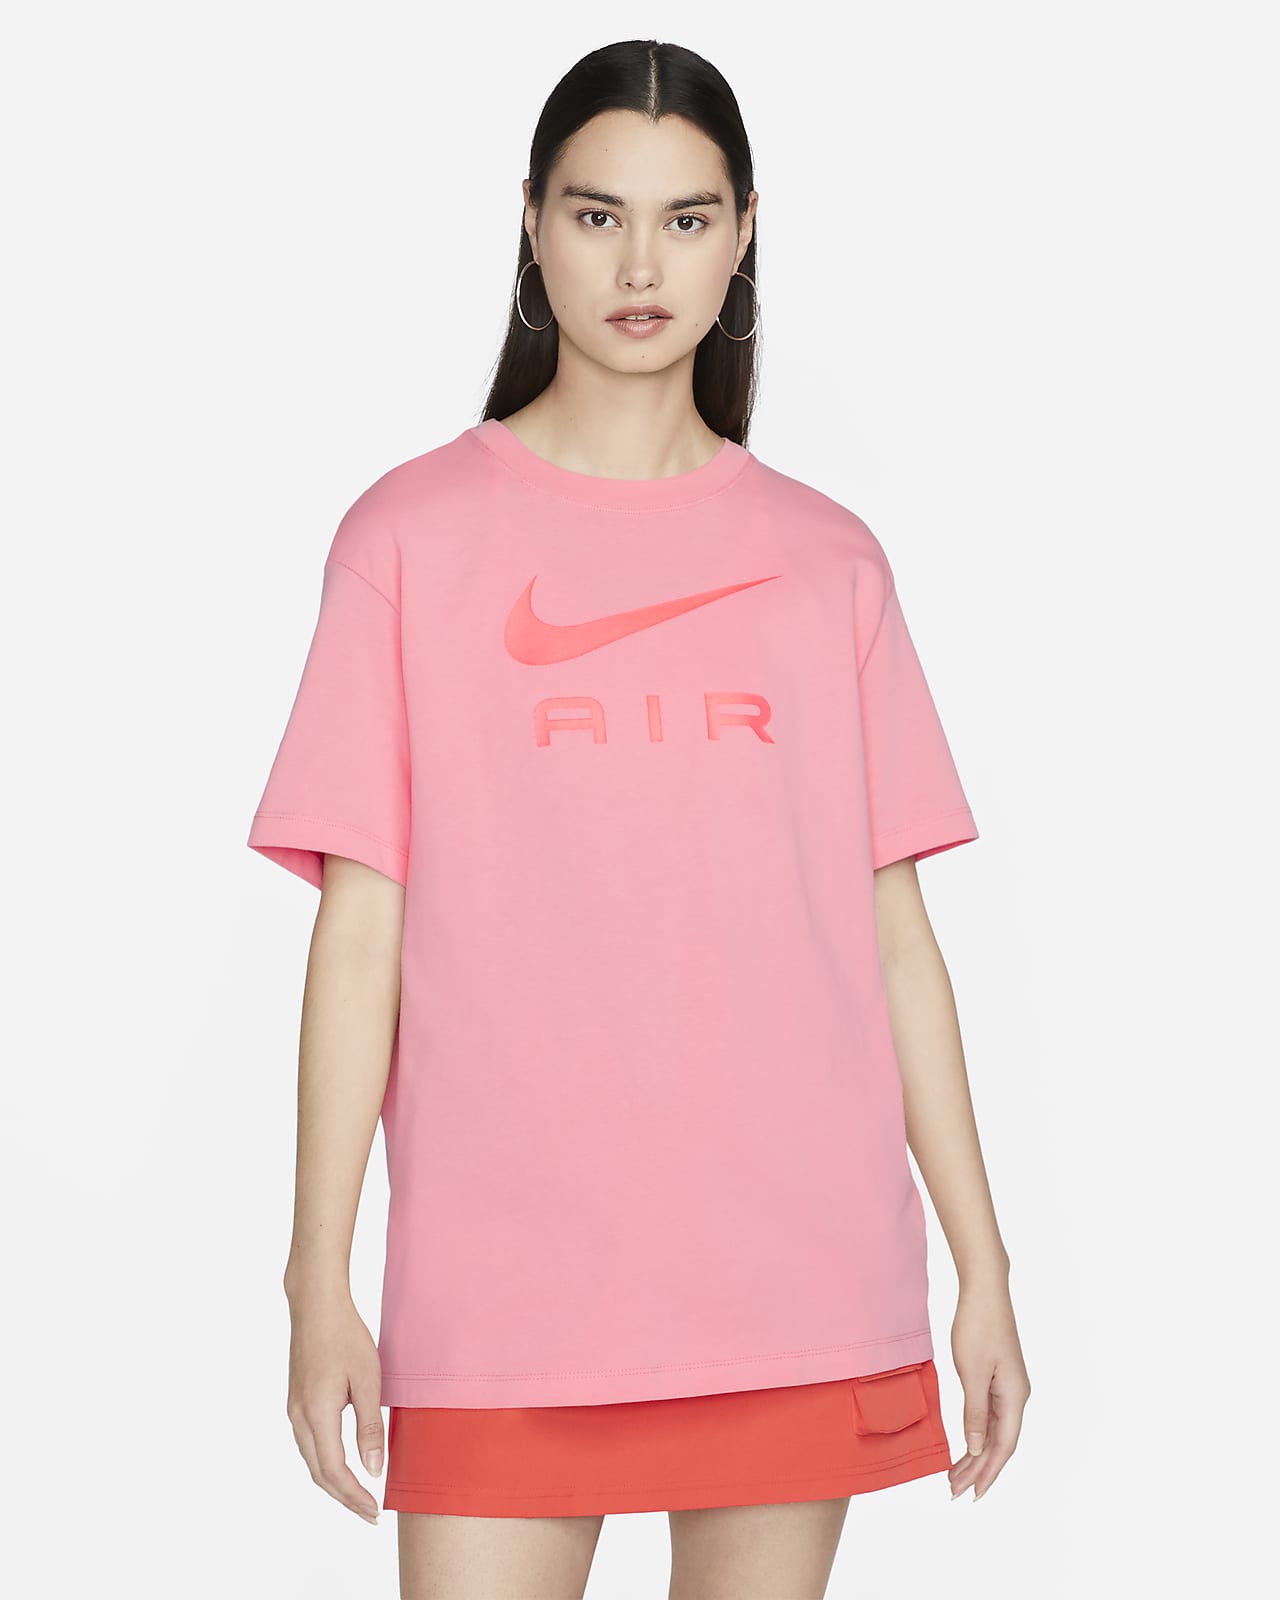 Nike Air Women'S T-Shirt. Nike Vn